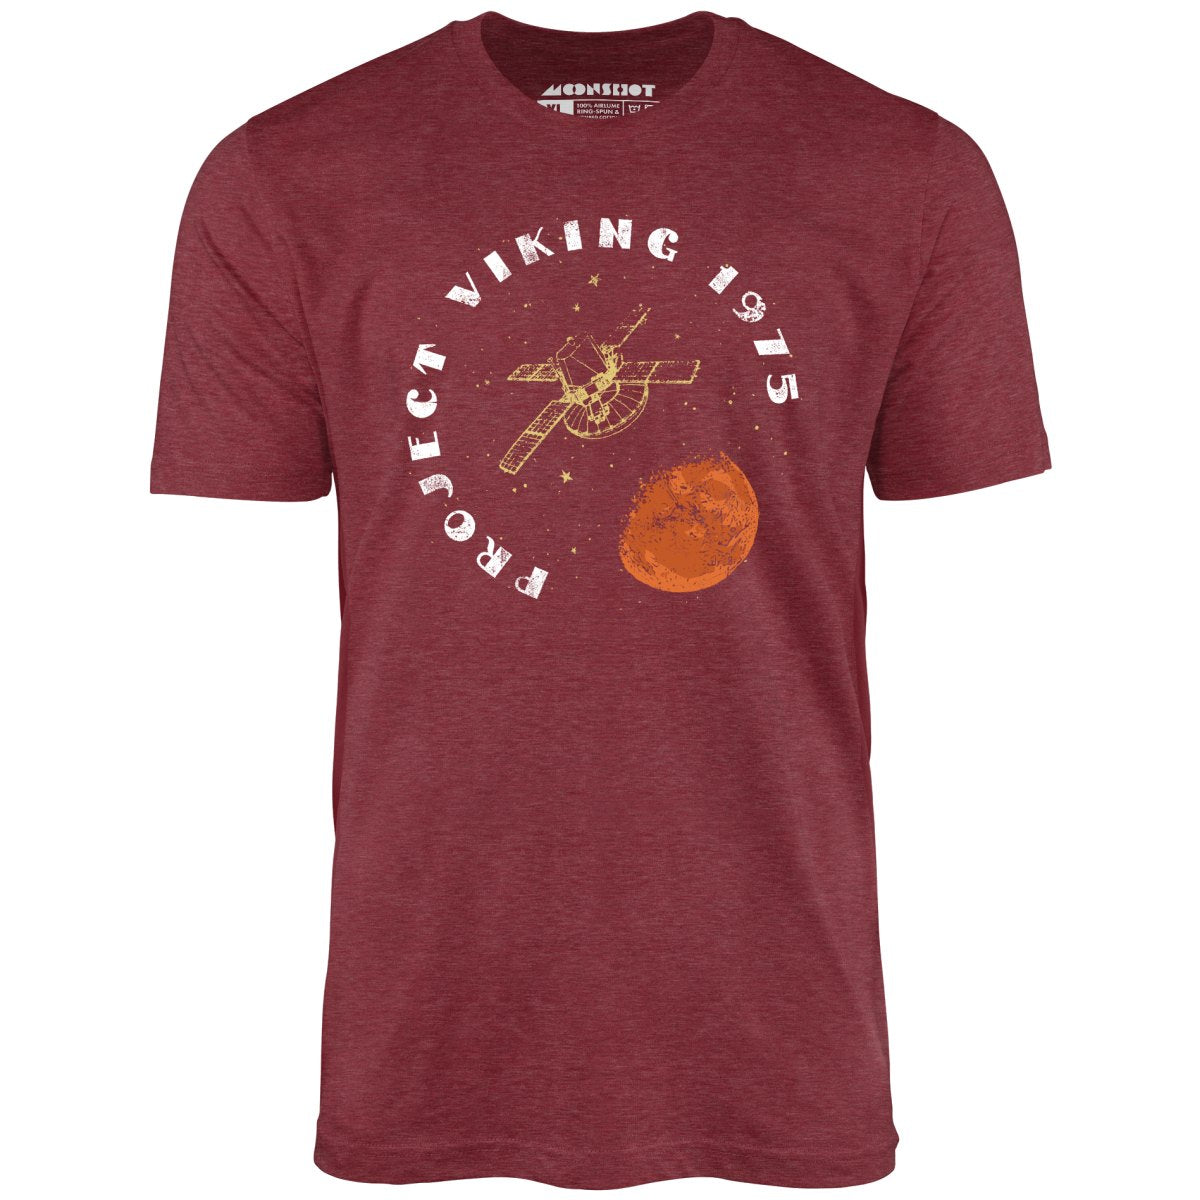 Project Viking 1975 - Unisex T-Shirt